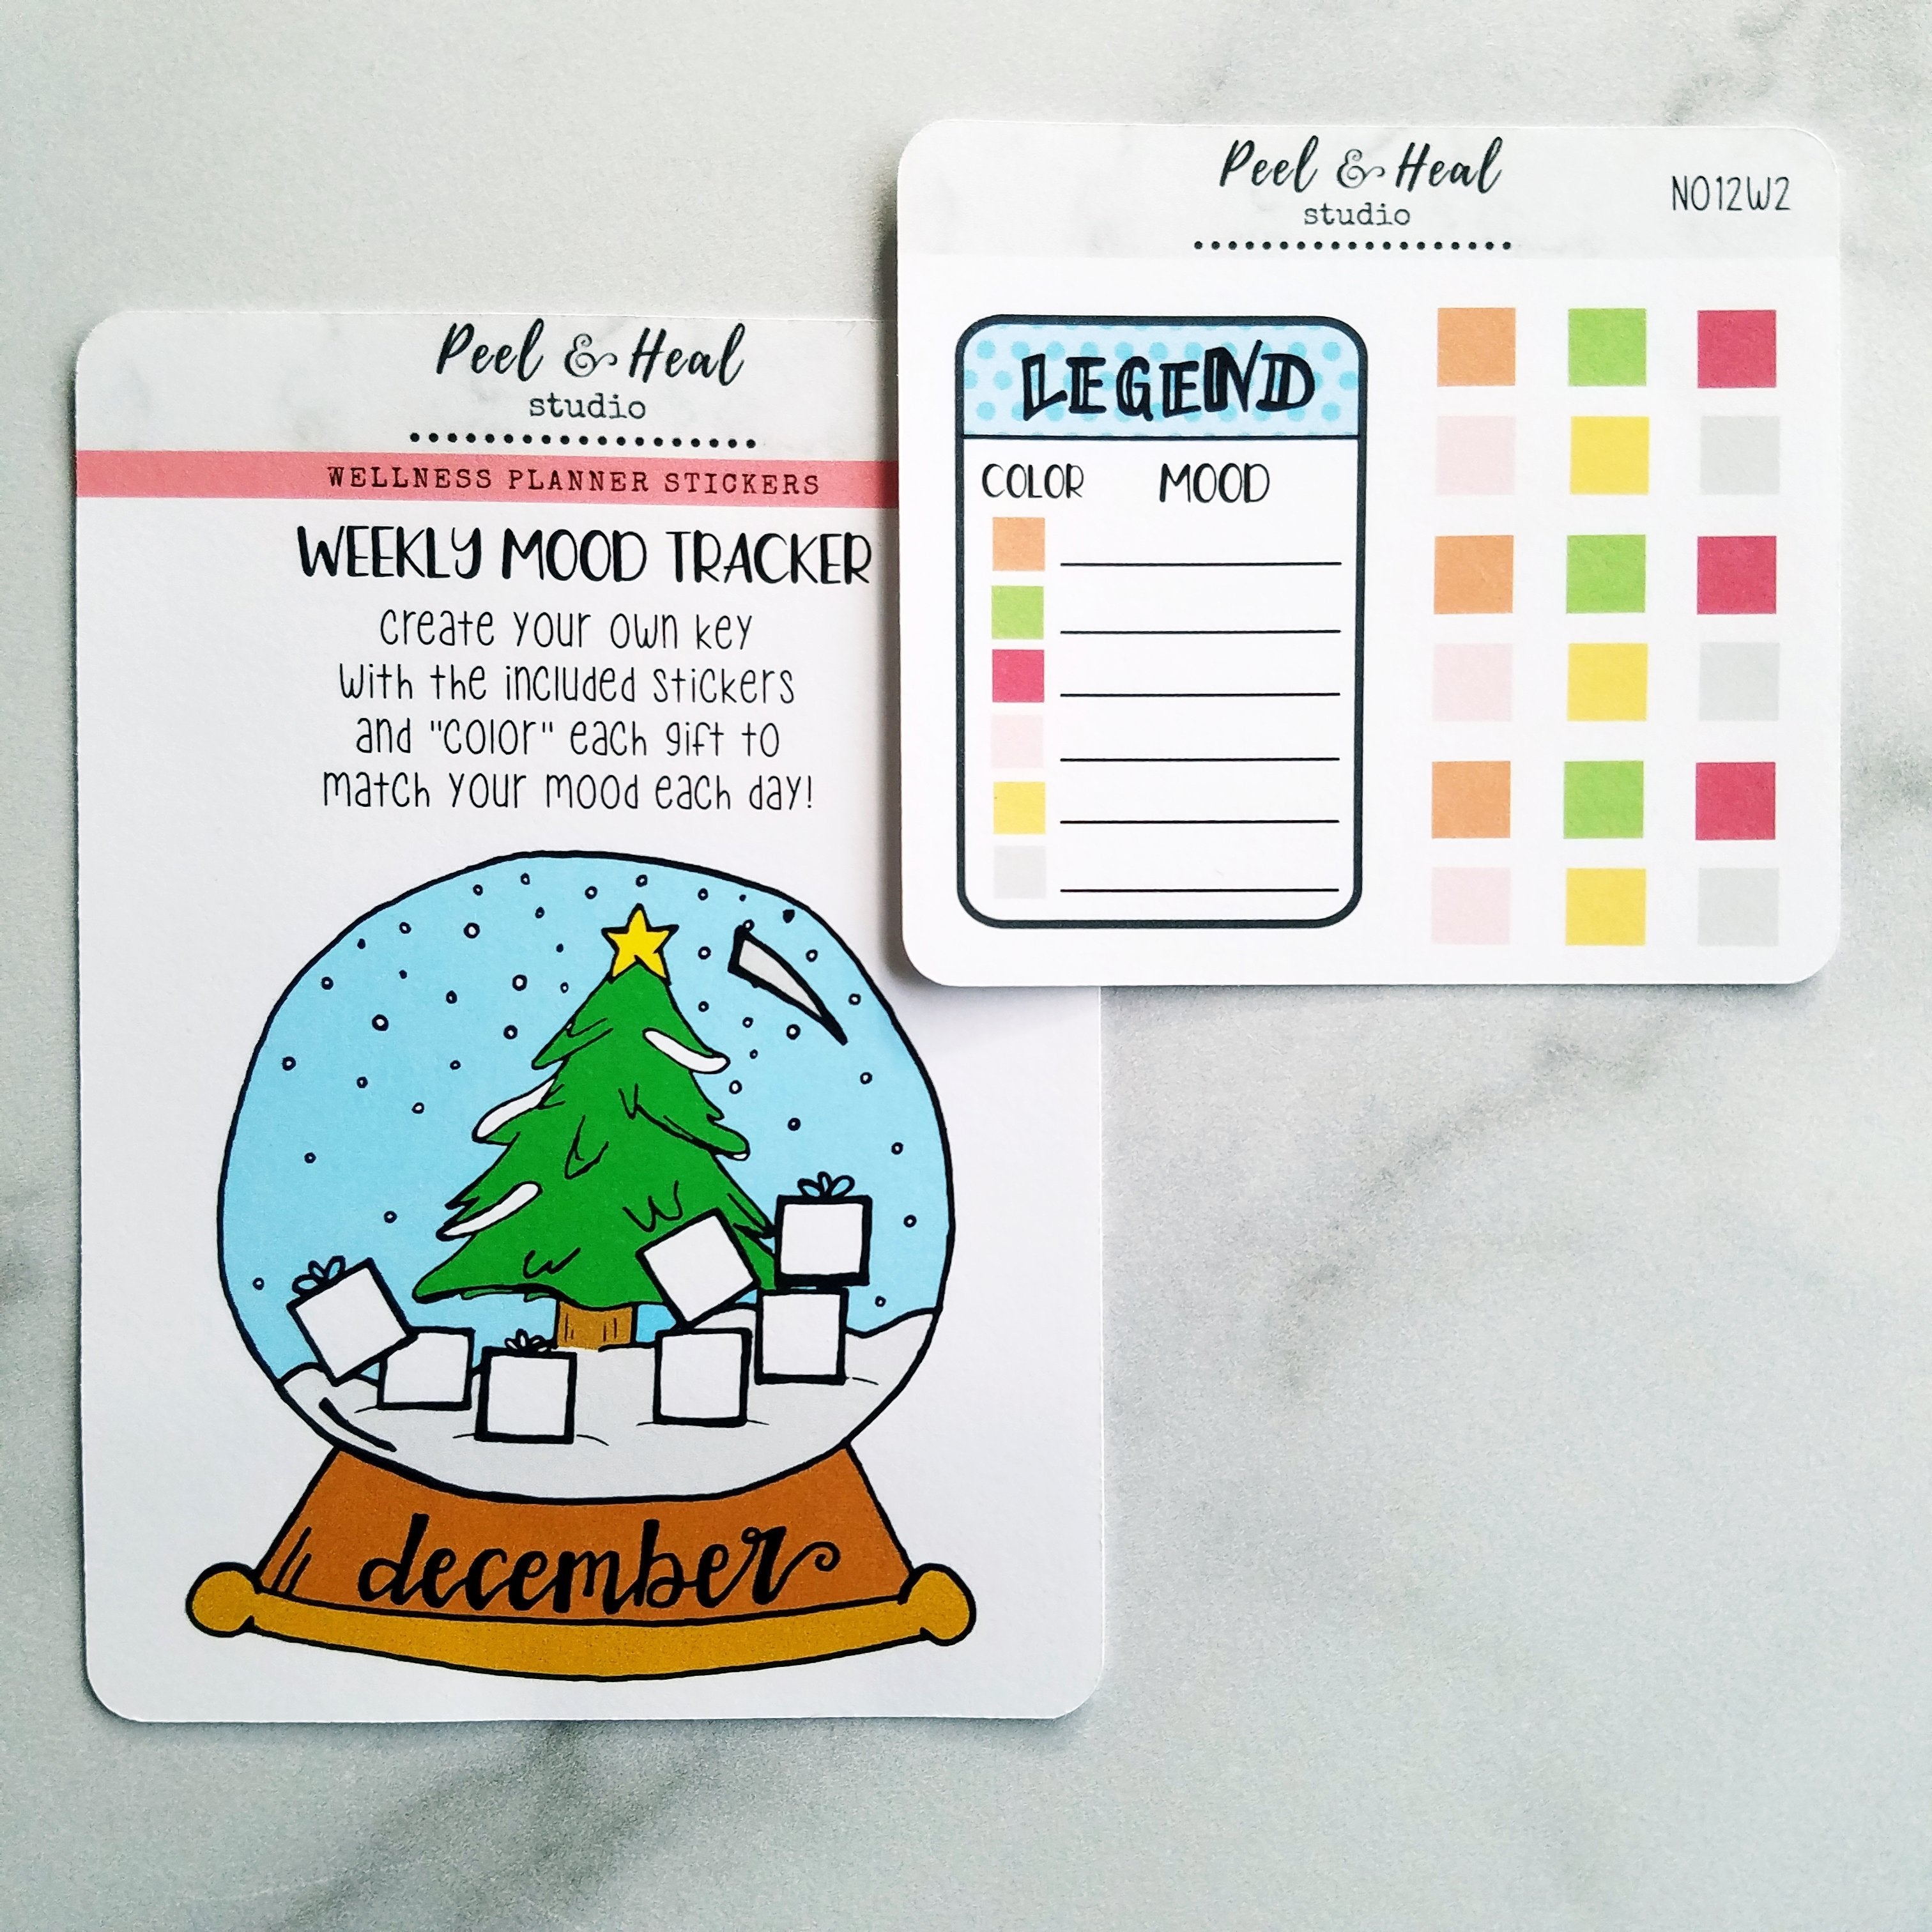 December Weekly Mood Tracker Kit